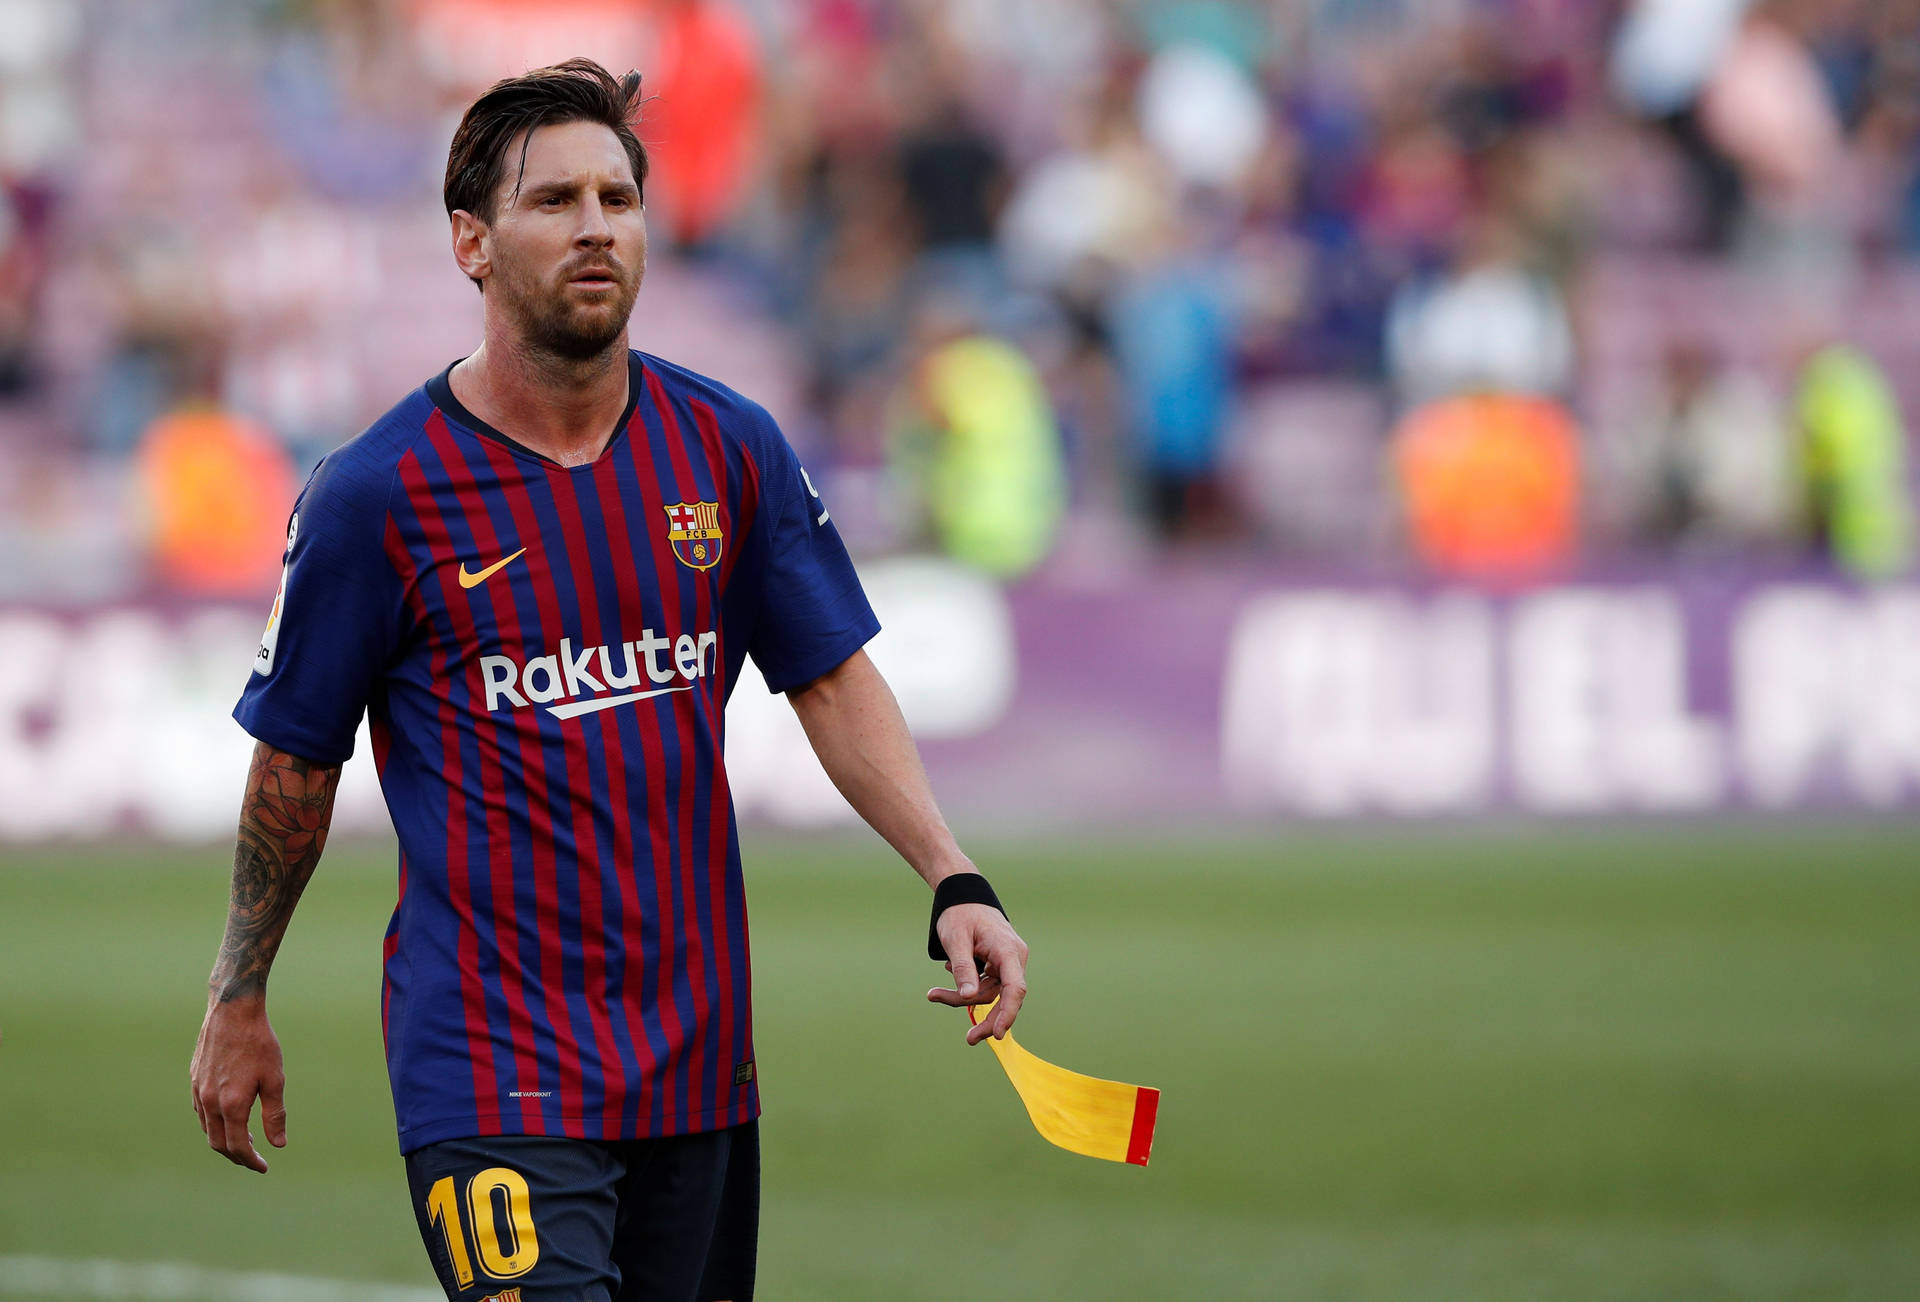 Lionel Messi 2020 Walking On Field Background